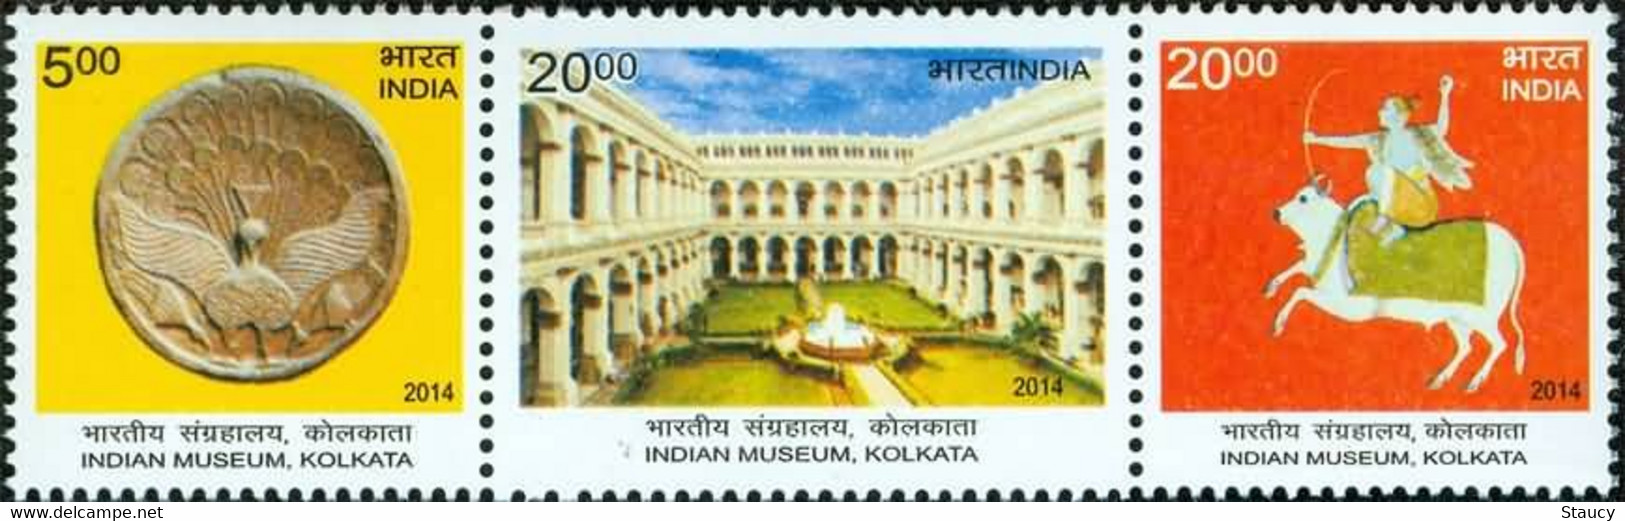 INDIA 2014 200 YEARS OF INDIAN MUSEUM KOLKATA 3v SET MNH (Archelogy, Art, Painting, History) As Per Scan - Gravuren